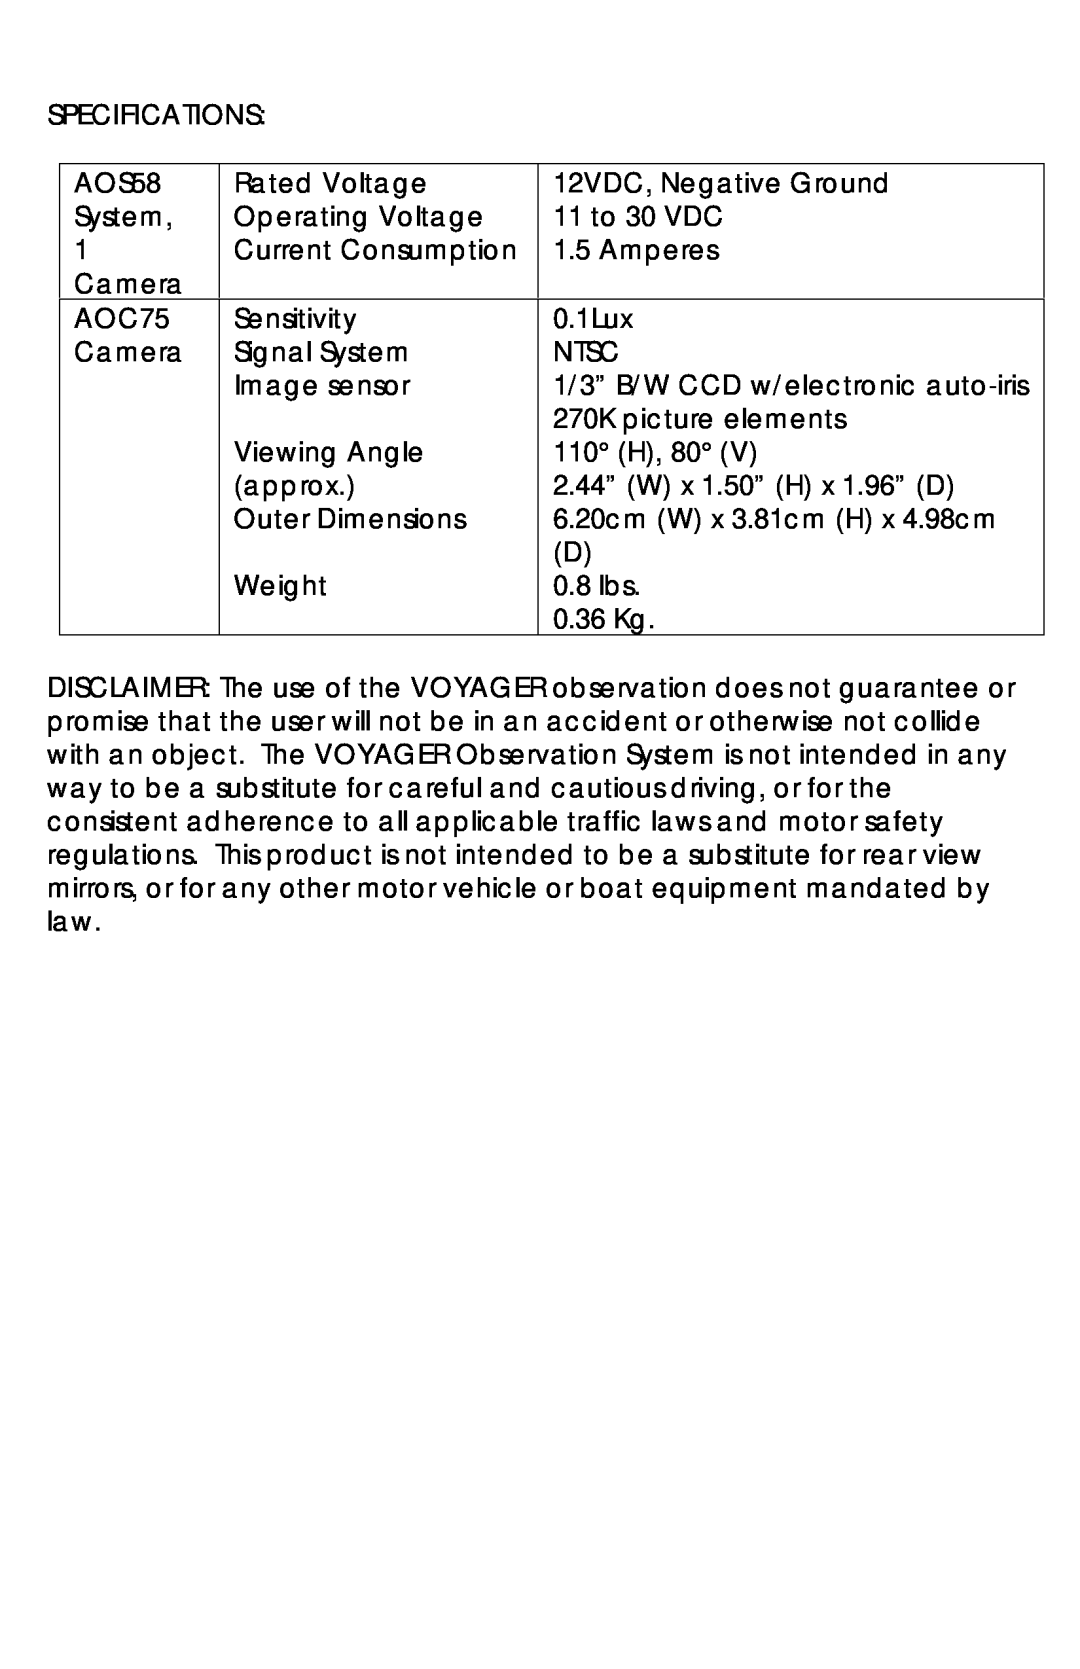 ASA Electronics AOC-75, AOS58 operation manual Specifications 